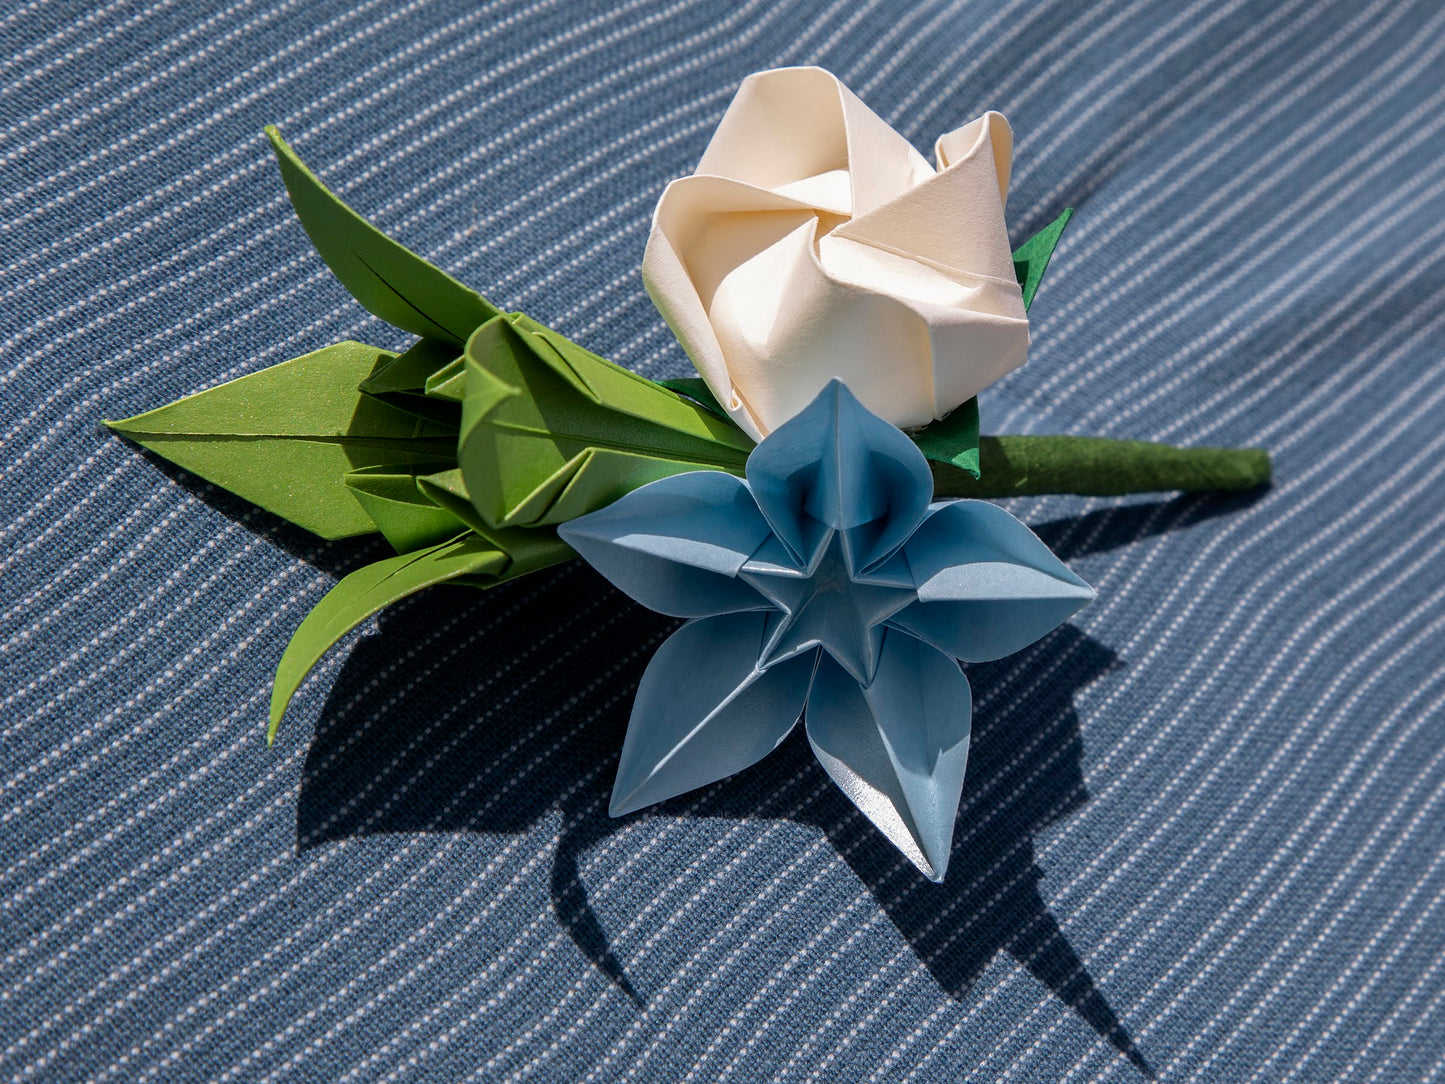 Bespoke origami paper flower bridal bouquet